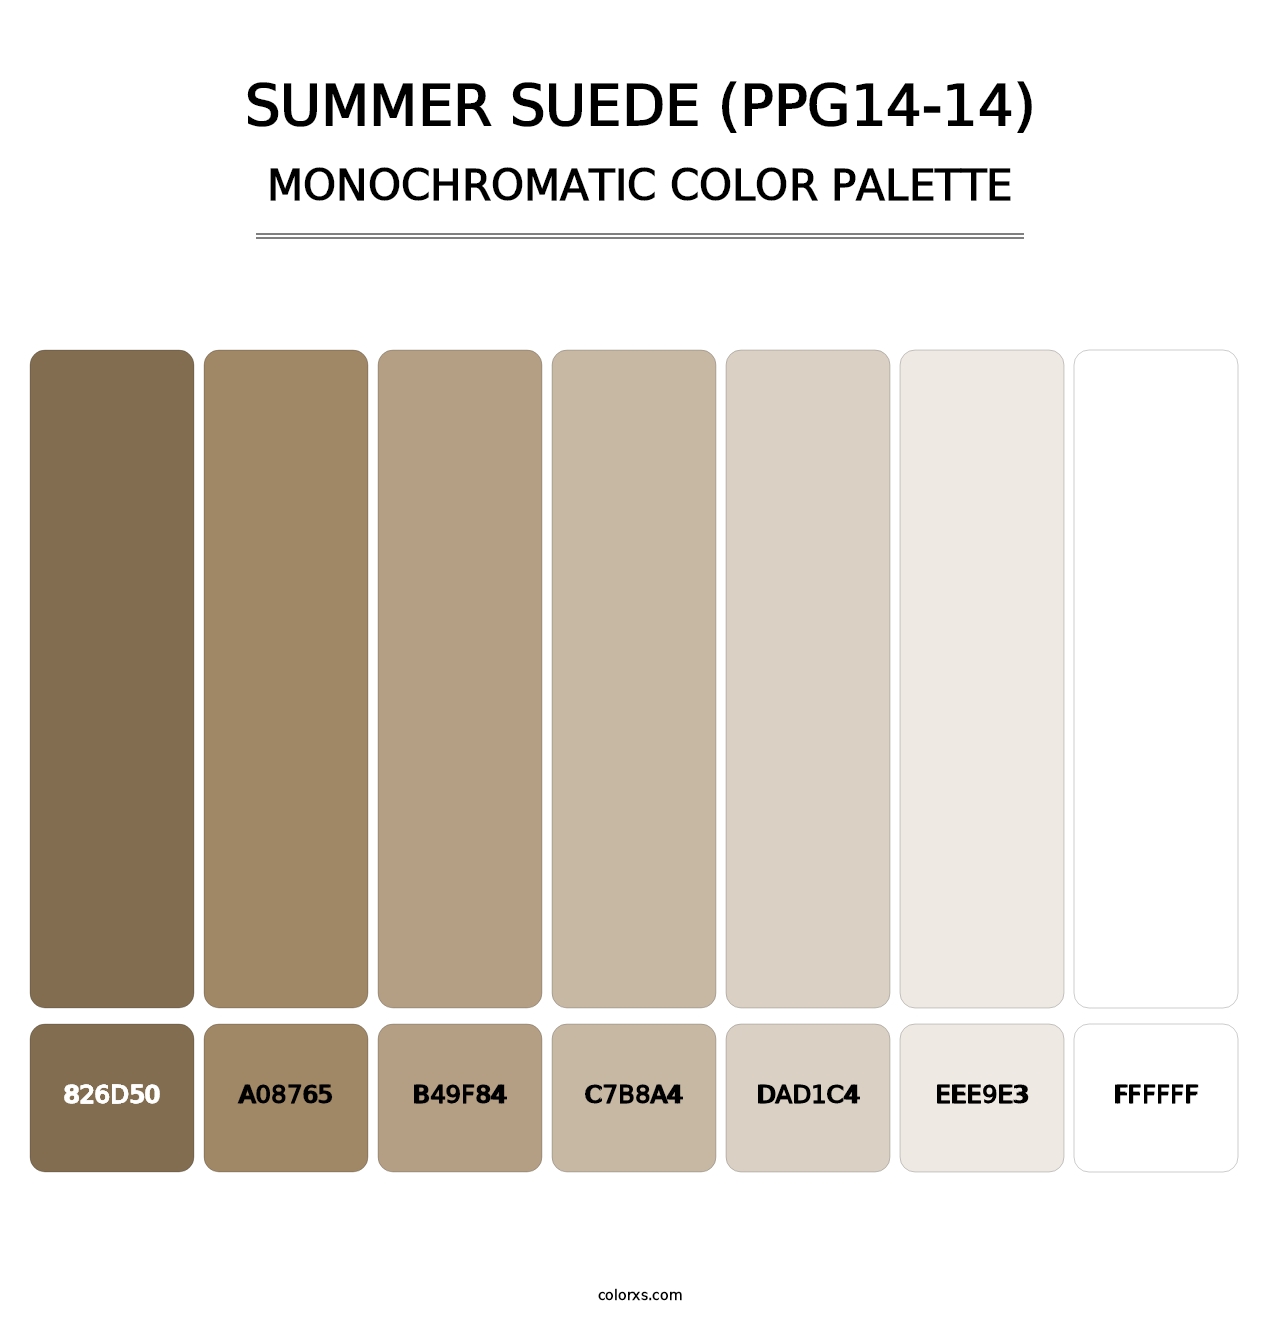 Summer Suede (PPG14-14) - Monochromatic Color Palette